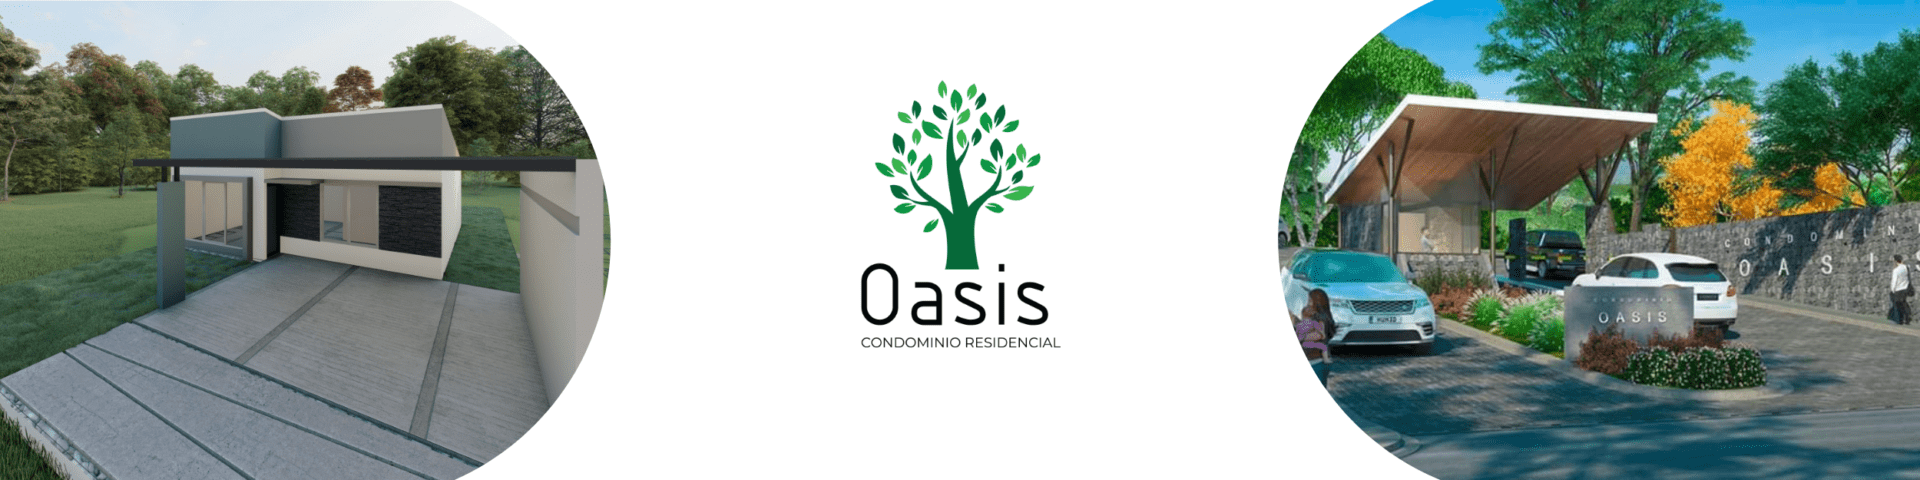 Oasis Condominio Residencial